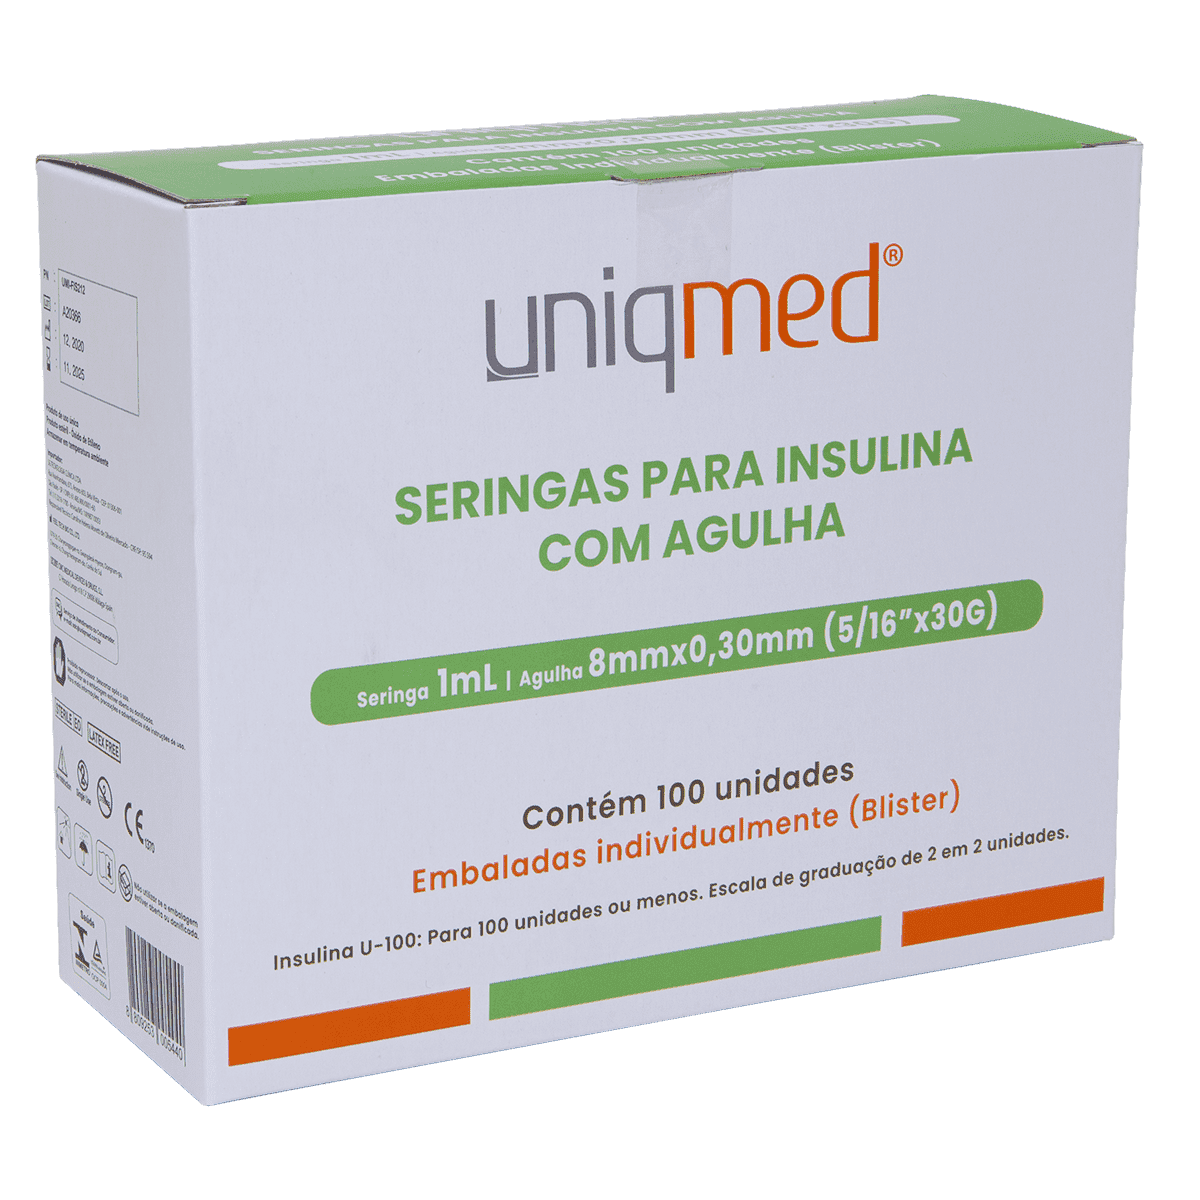 Seringas para Insulina Uniqmed 1mL Agulha 8mmx0.30mm - Caixa com 100 unidades (Blister individual)